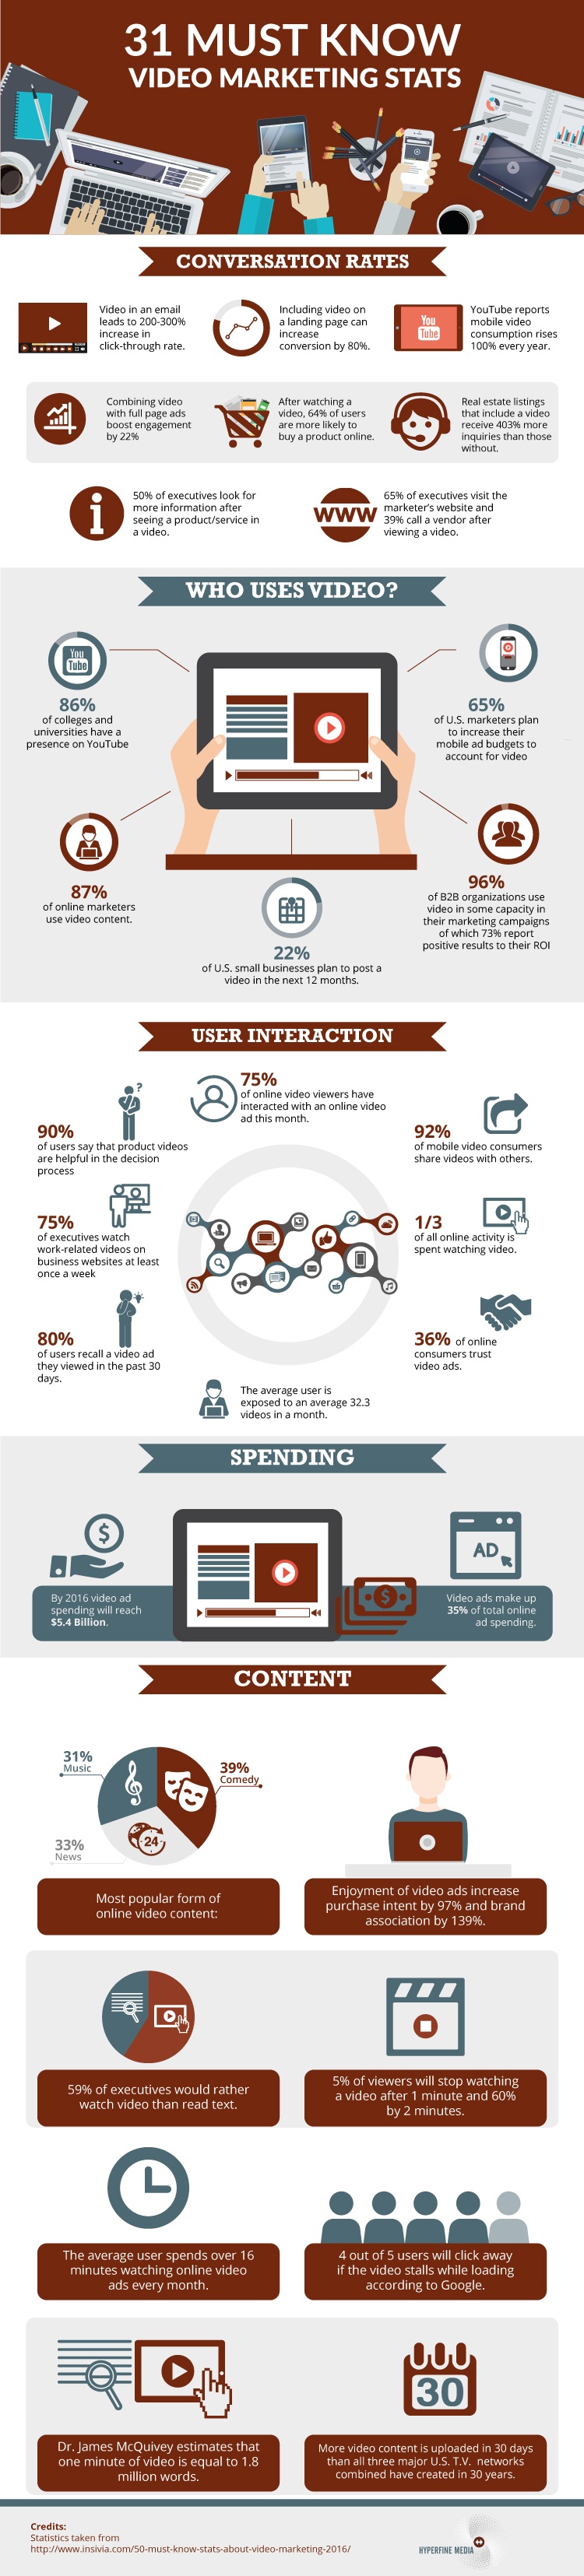 video-marketing-statistics-infographic.jpg